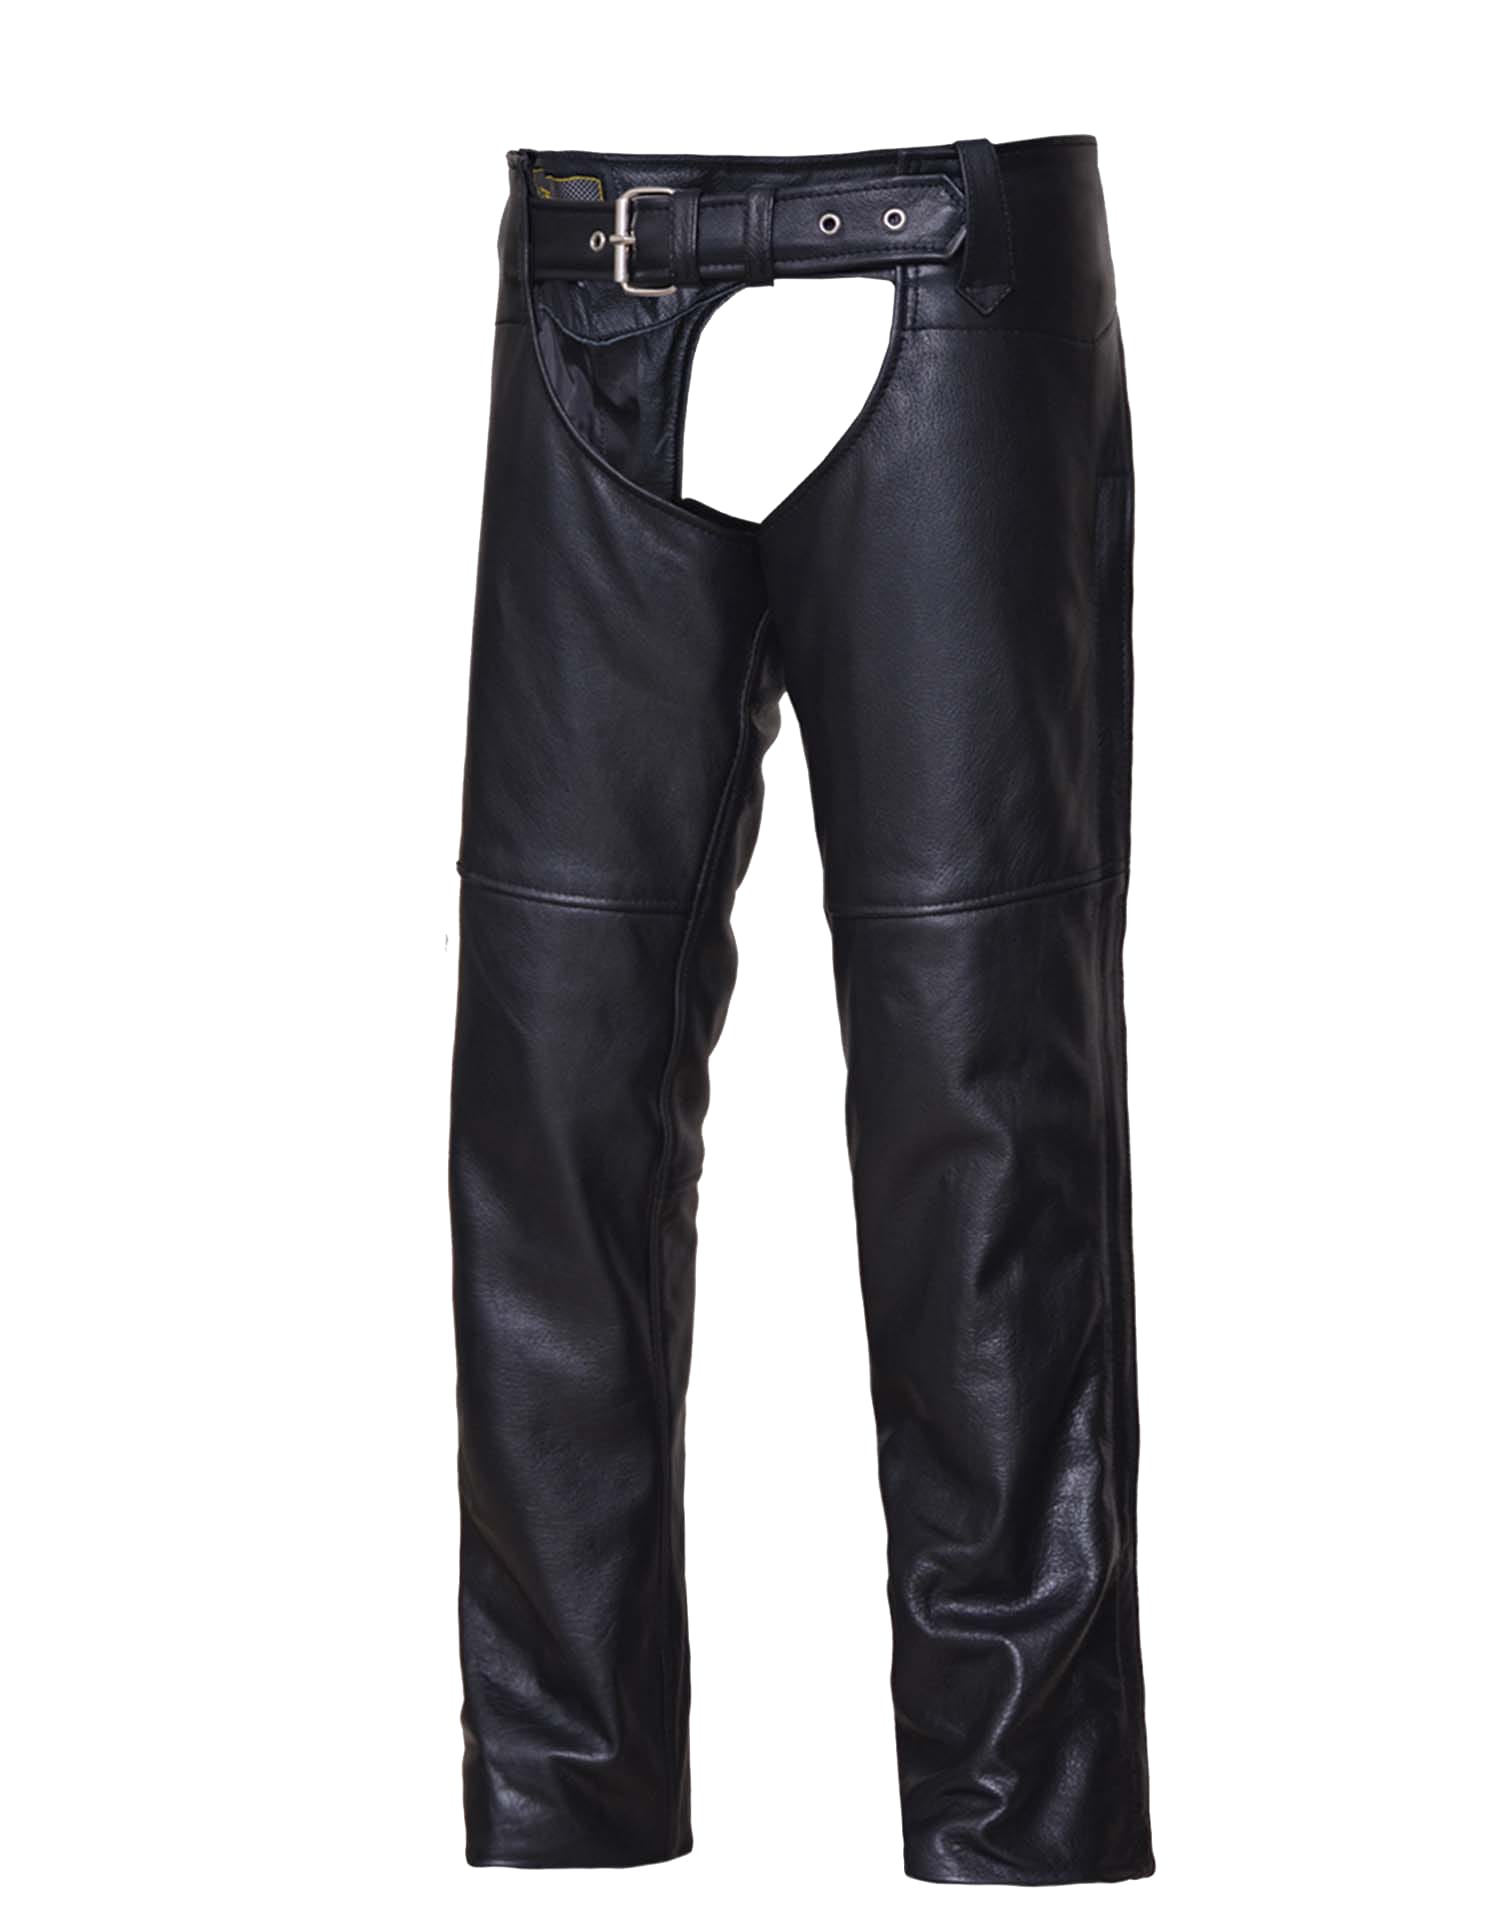 Daisy Duke Motorcycle Denim Sleeveless Cropped Midriff Shirt Top-  ChersDelights Leather Apparel